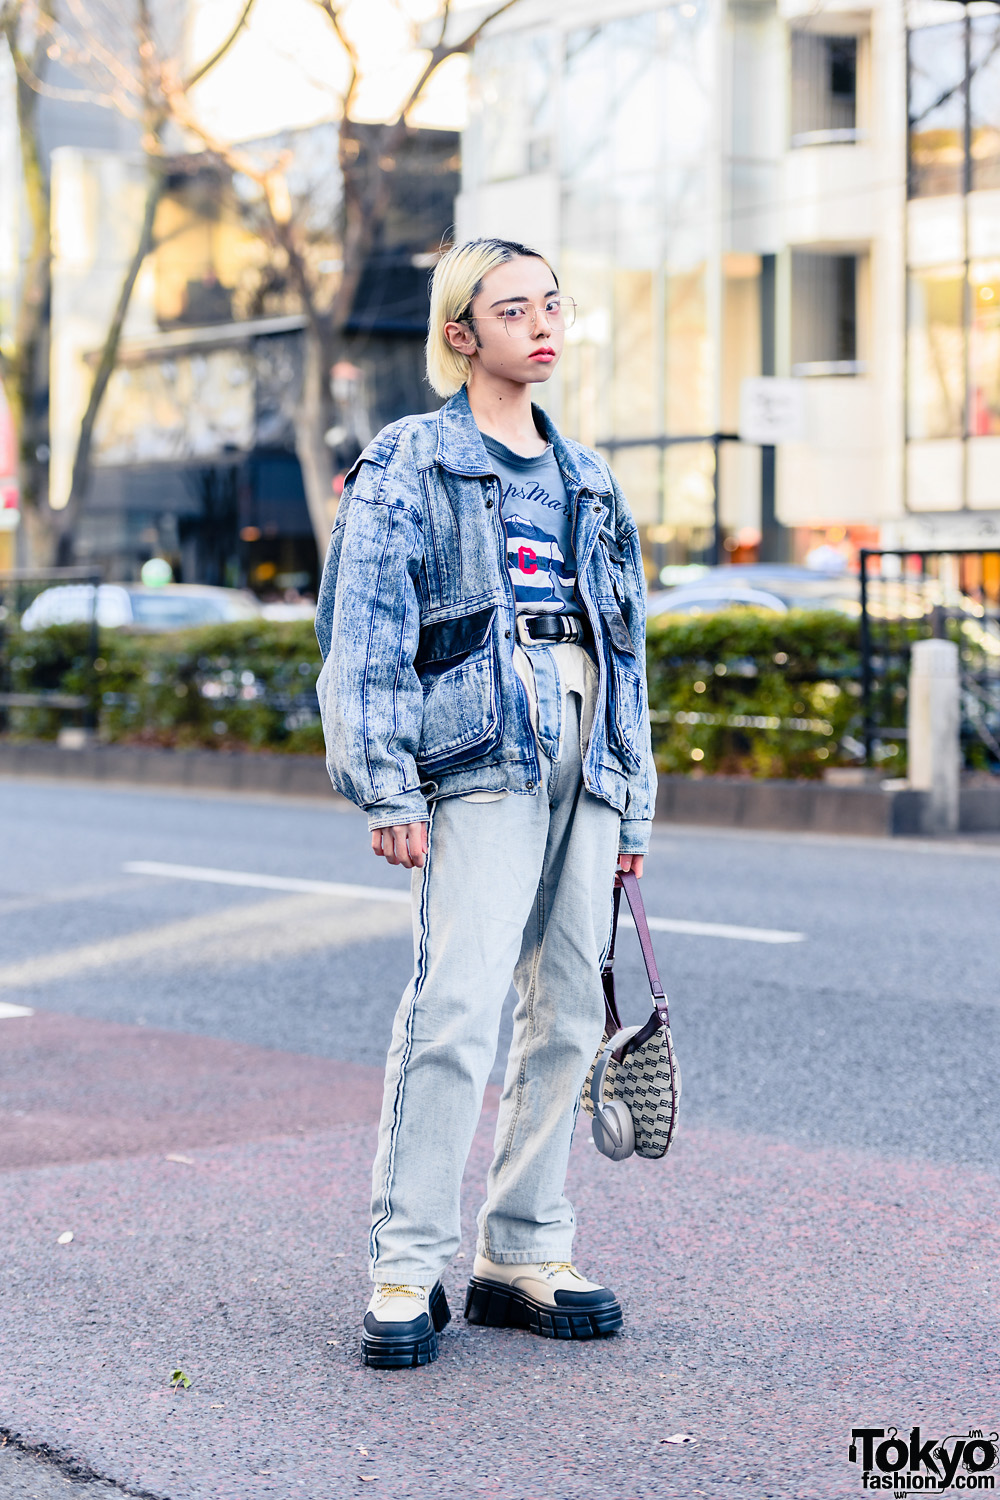 Japanese Rapper & Model in Denim Street Style w/ Sony Headphones, Resale Fashion, Rauco House Acid Wash Jeans, Balenciaga & Zara